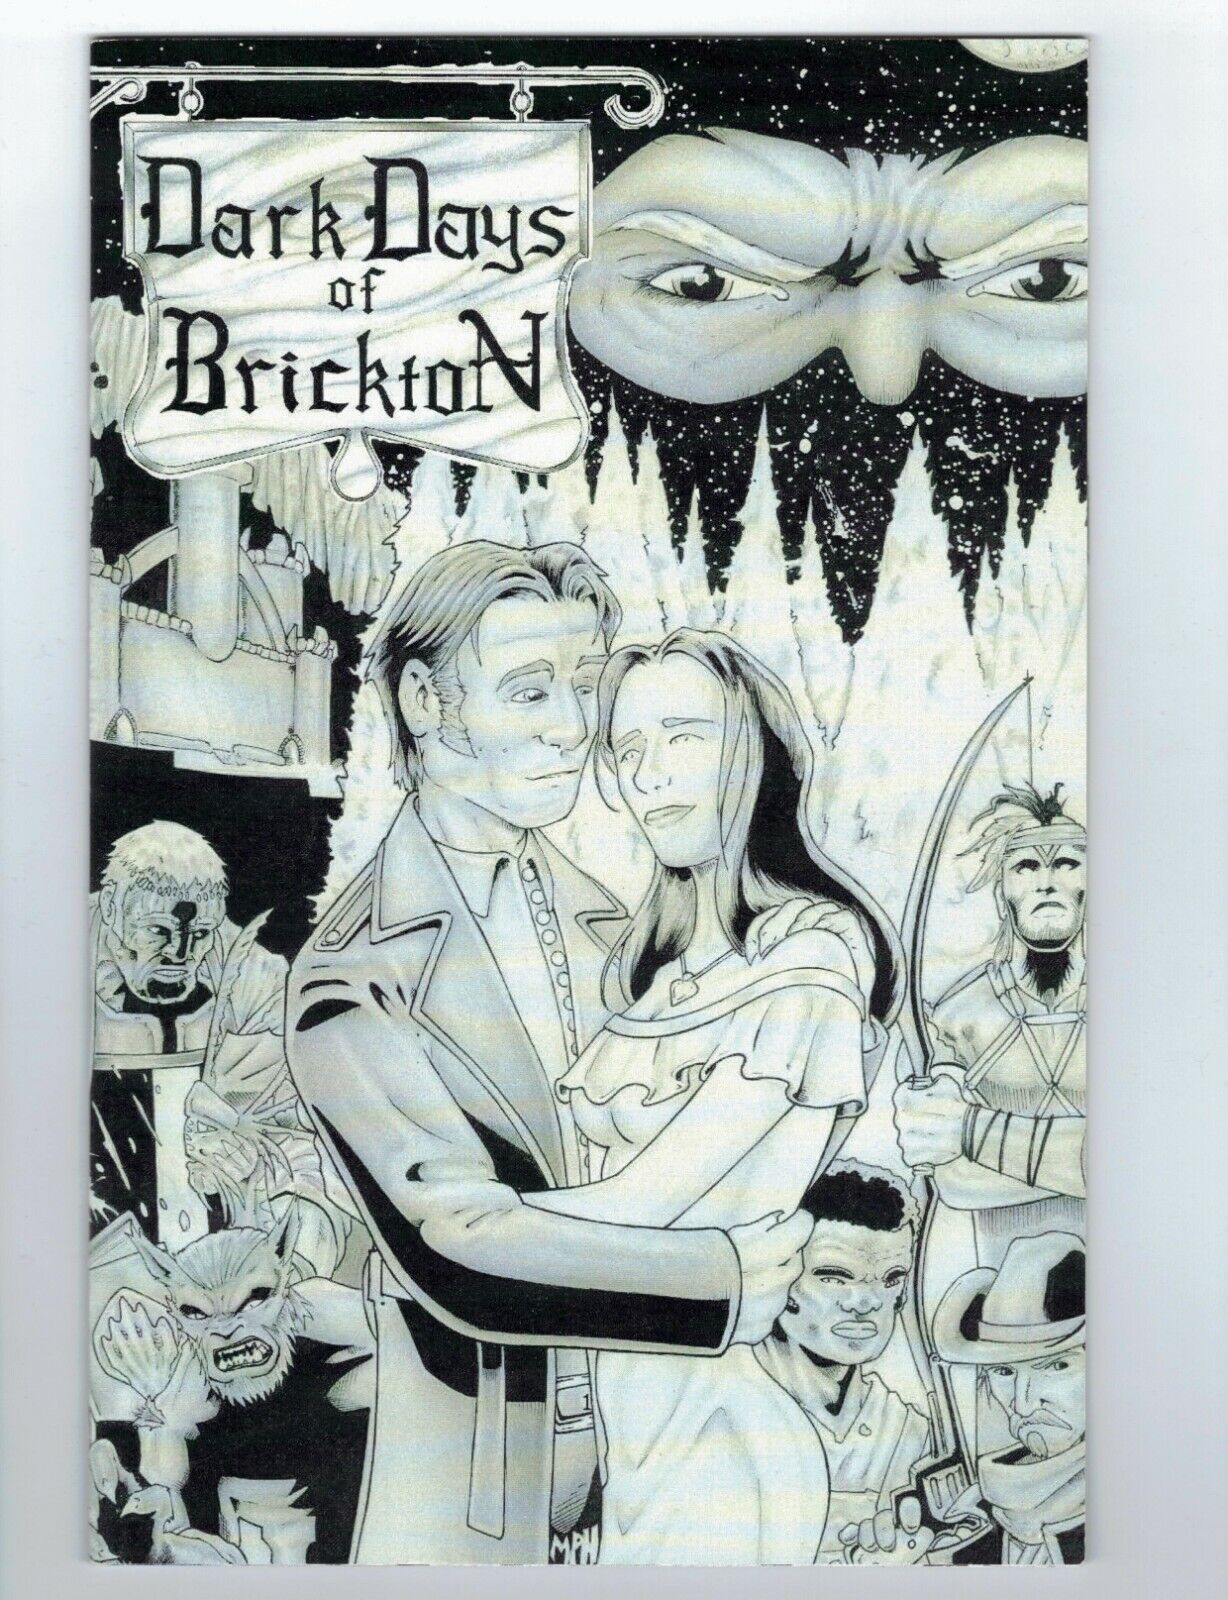 Dark Days of Brickton #1 VF+ signed 3X by Nerdaties team - RARE comic book